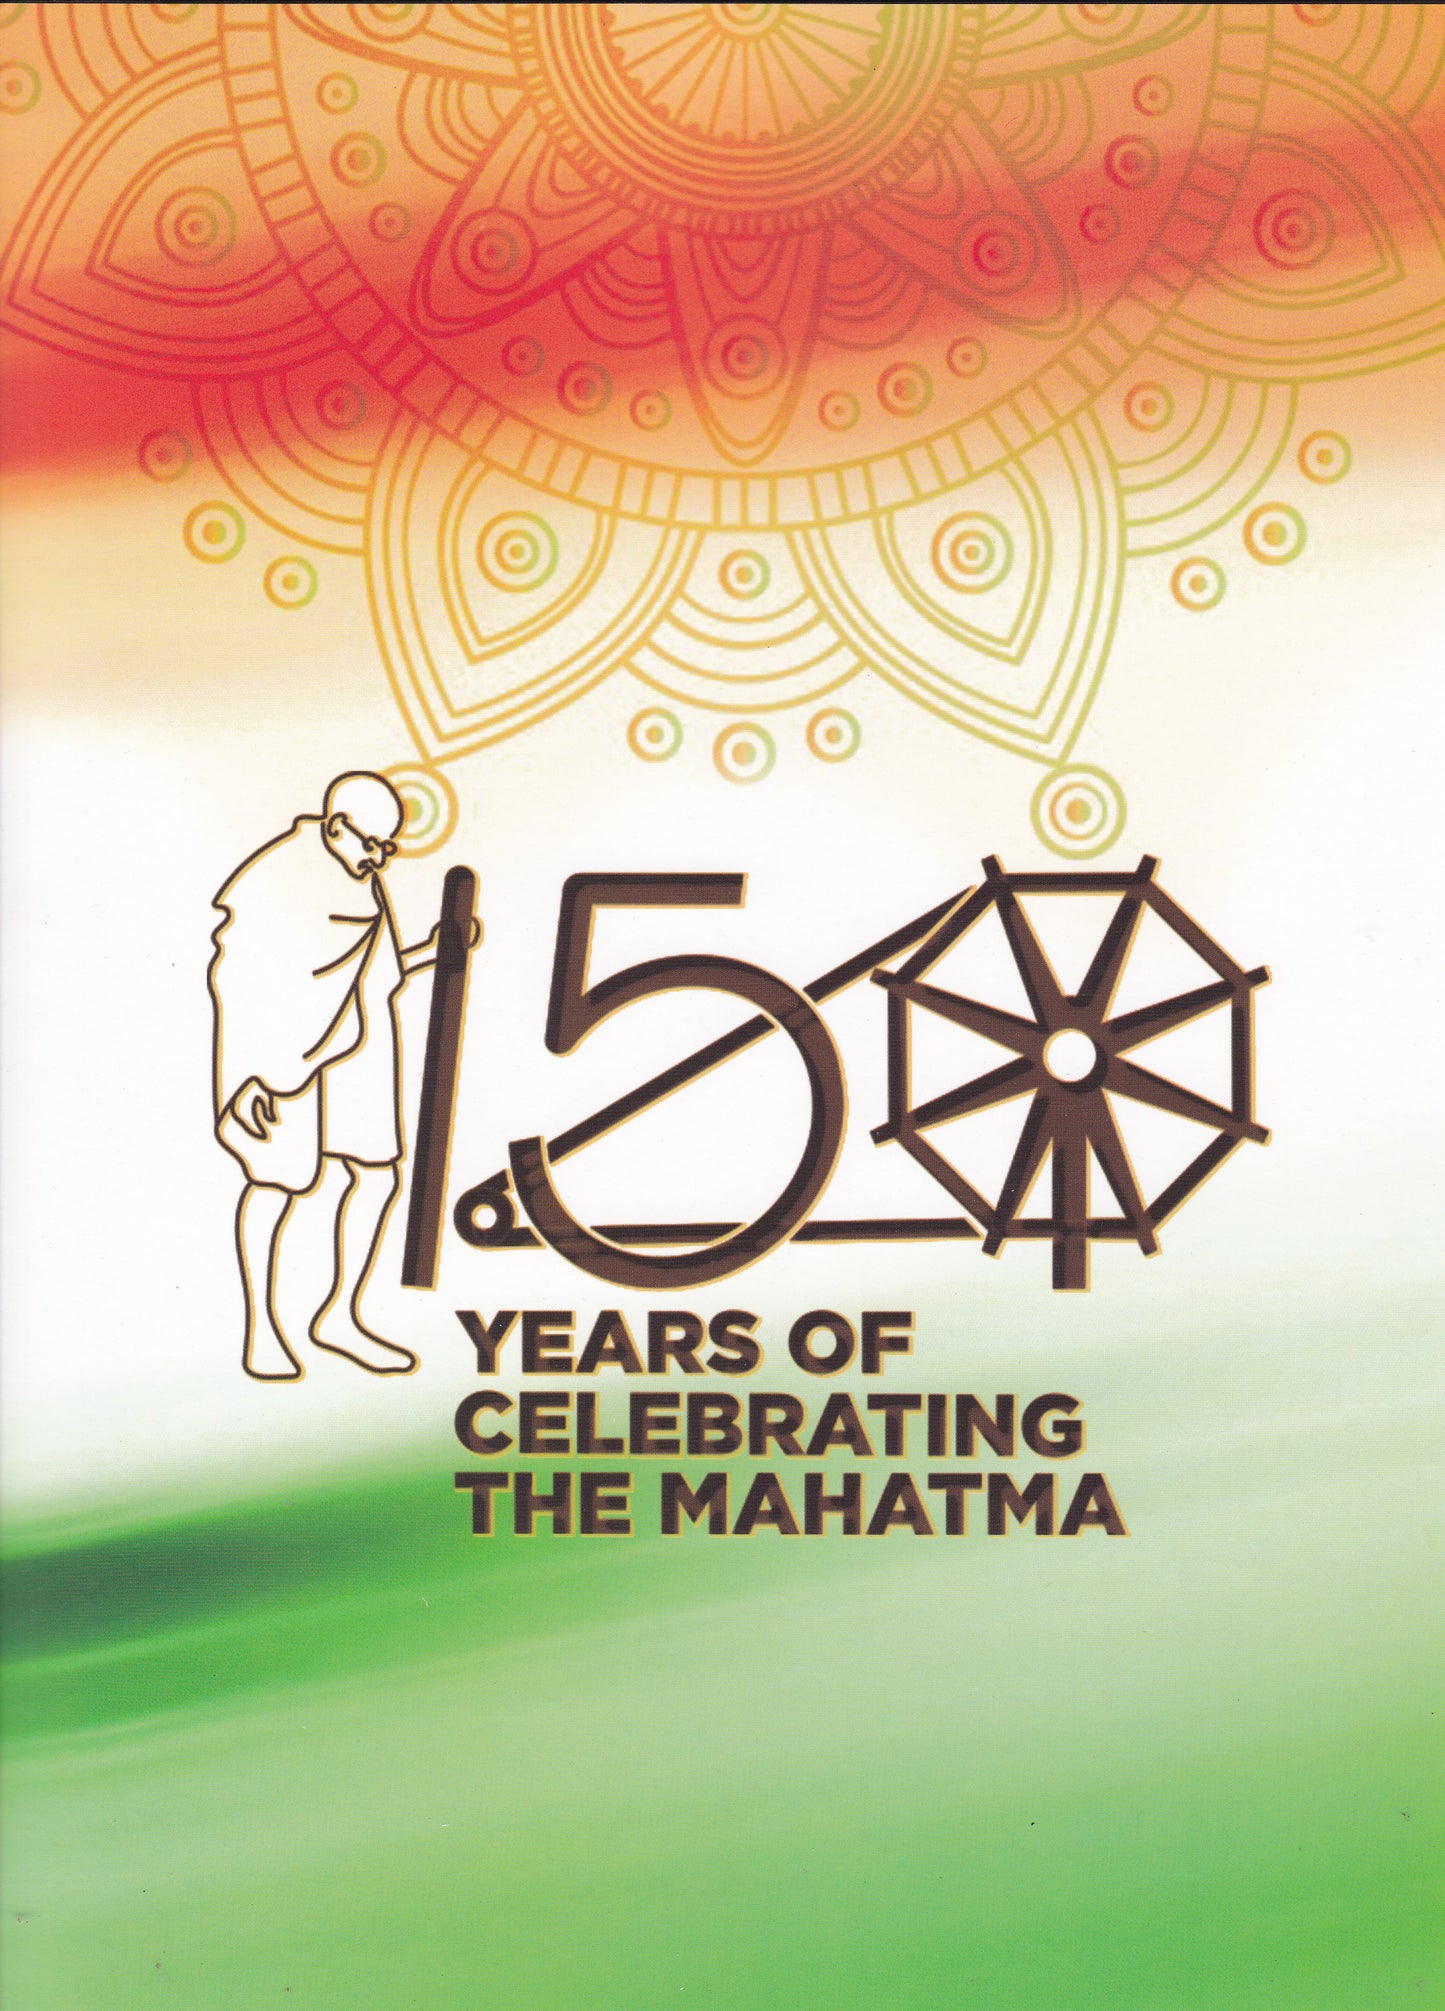 Indonesia 150th Years of celebrating the Mahatma Gandhi's 150th birthday-Rare.